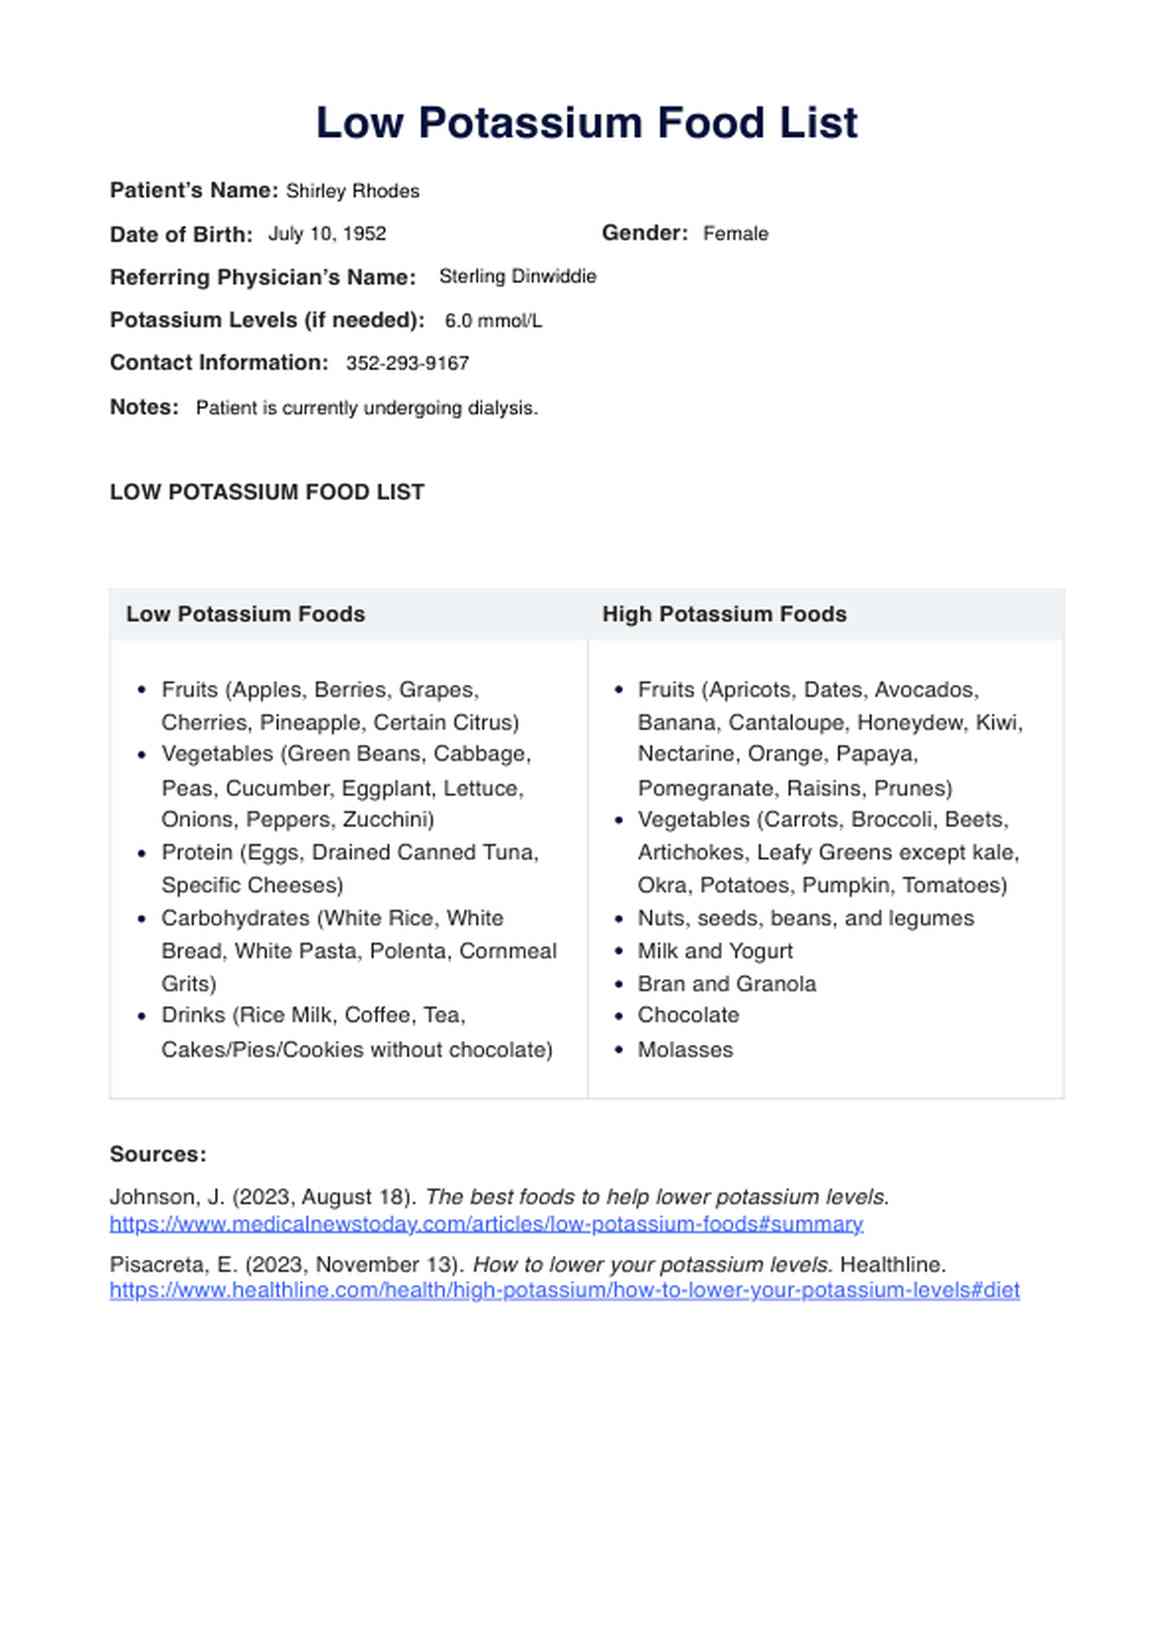 Low potassium foods list PDF Example